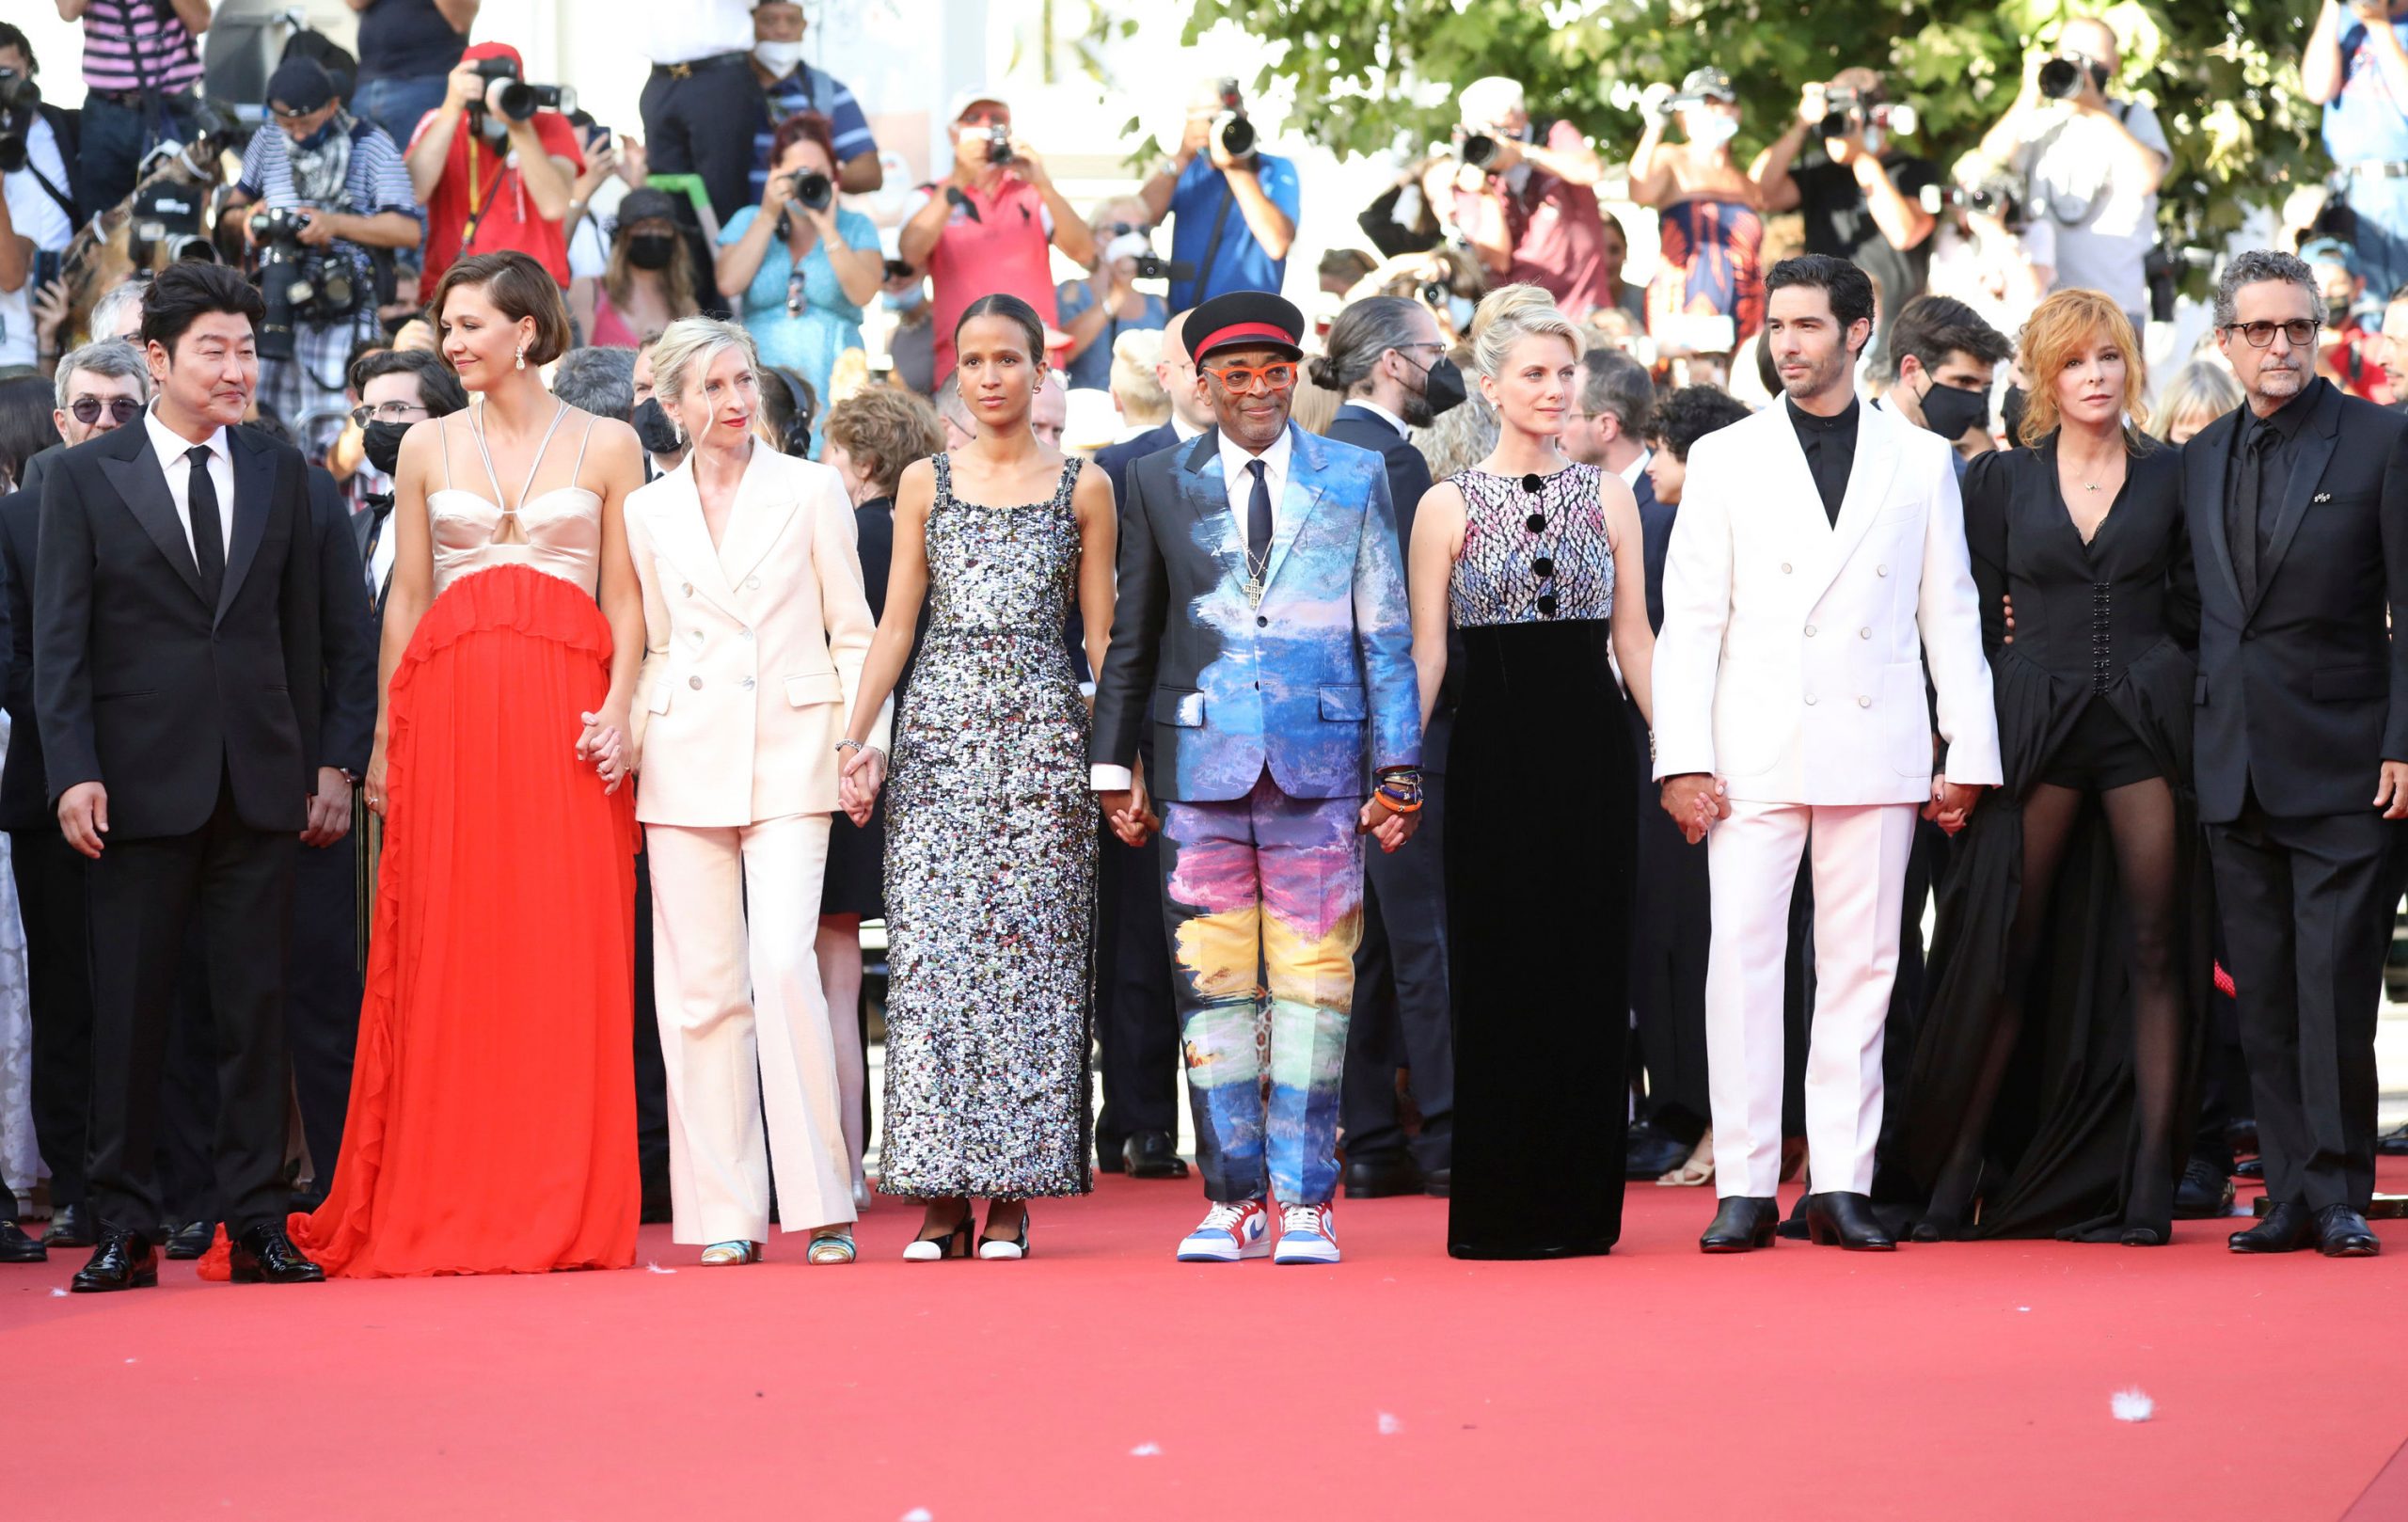 Cannes jury president Spike Lee mistakenly reveals Palme d’Or winner